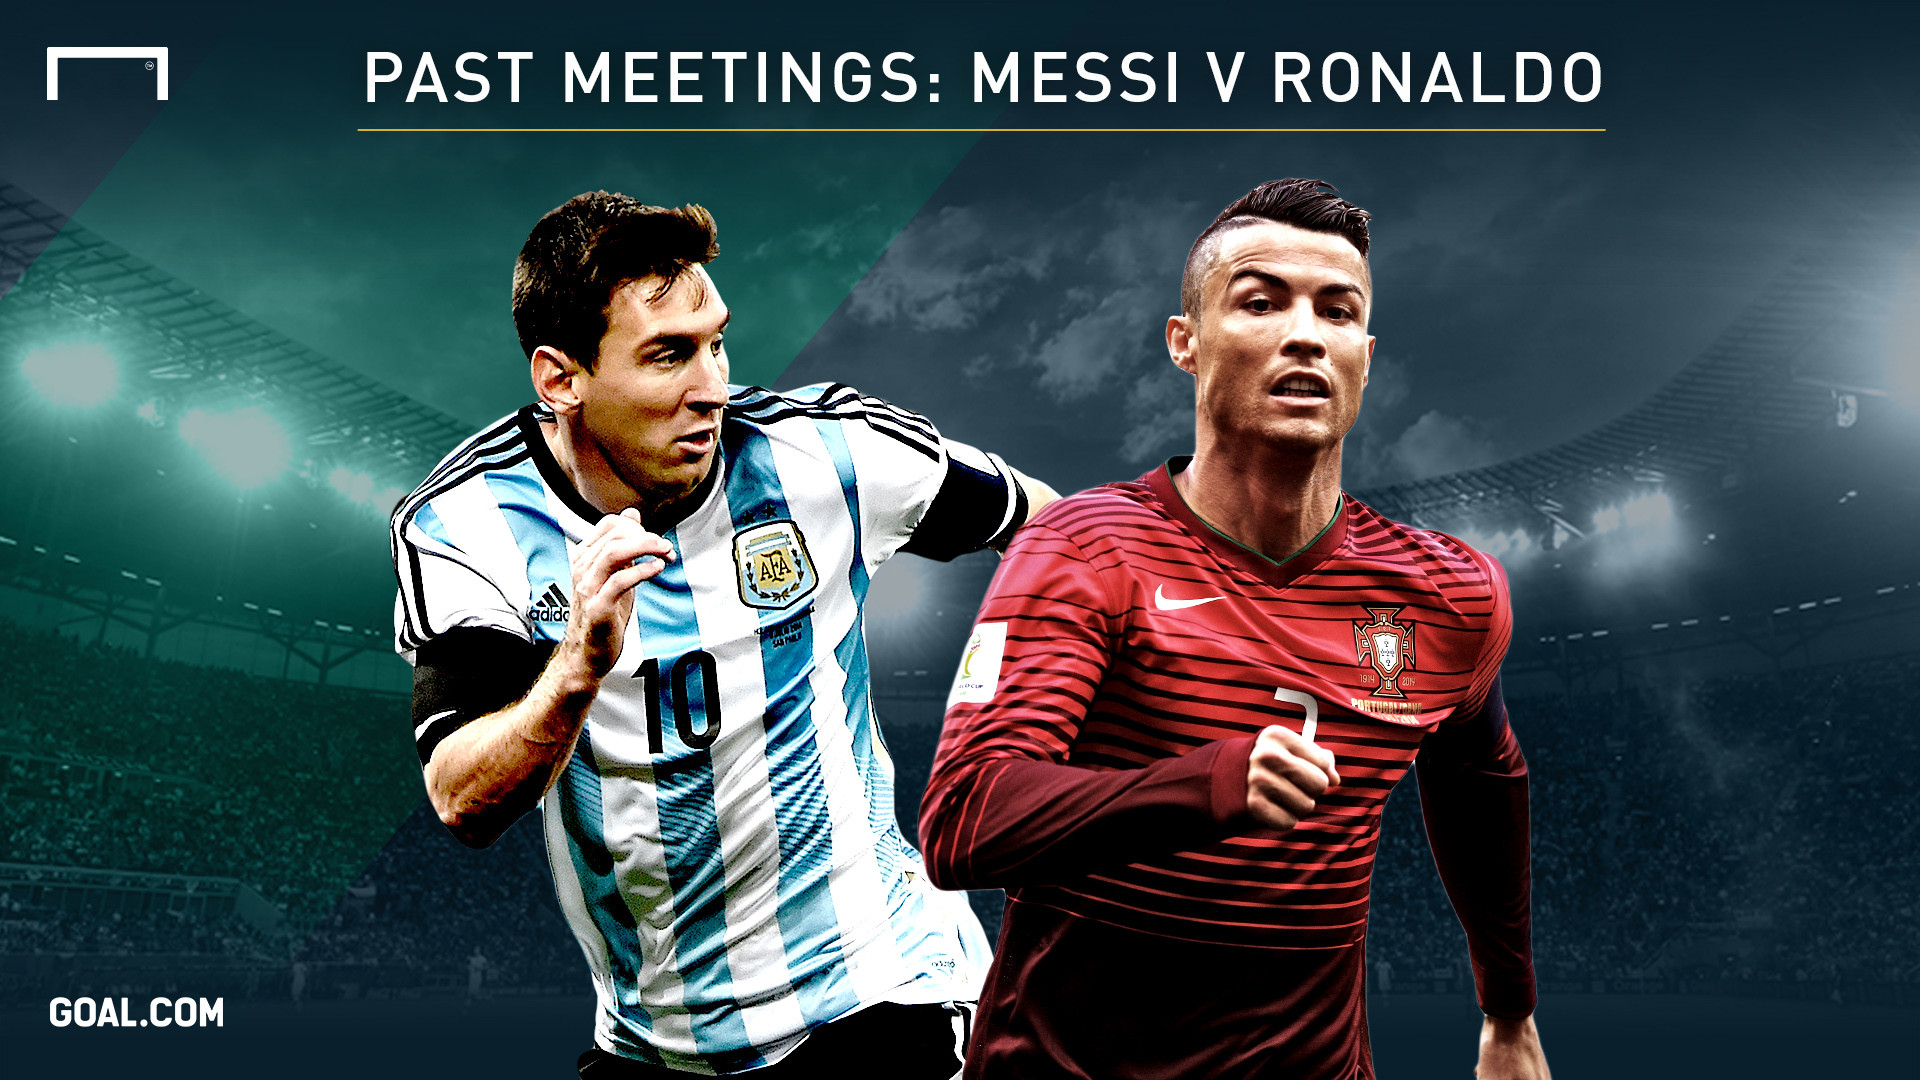 Messi vs Ronaldo Wallpaper 2018 HD (77+ images)